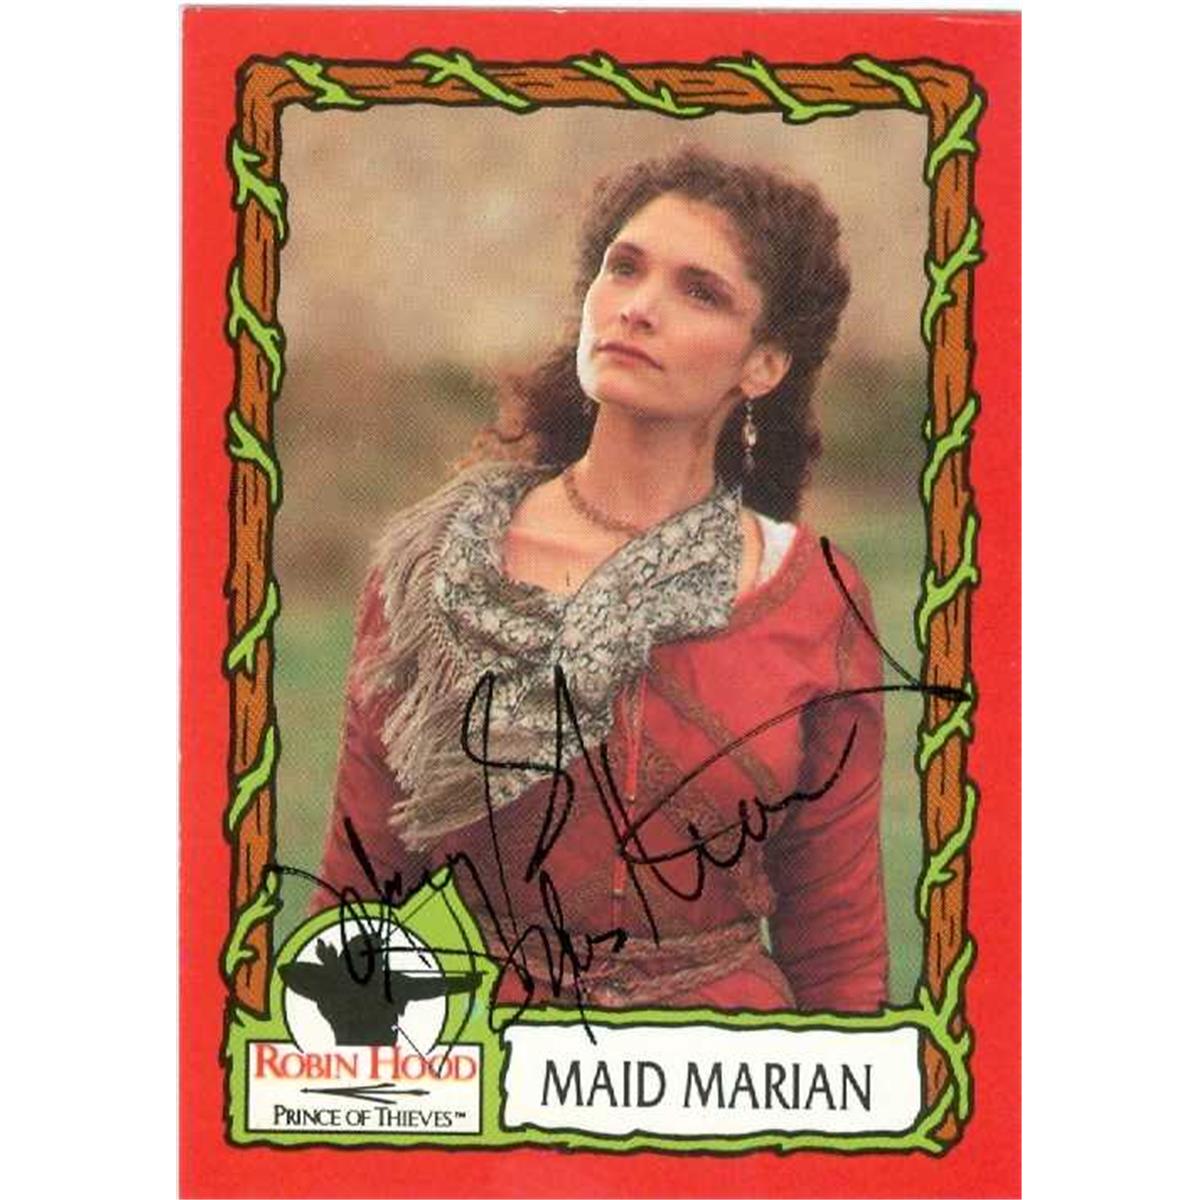 584503 Mary Elizabeth Mastrantonio Signed Robin Hood Card - No.5 Maid Marian -  Autograph Warehouse